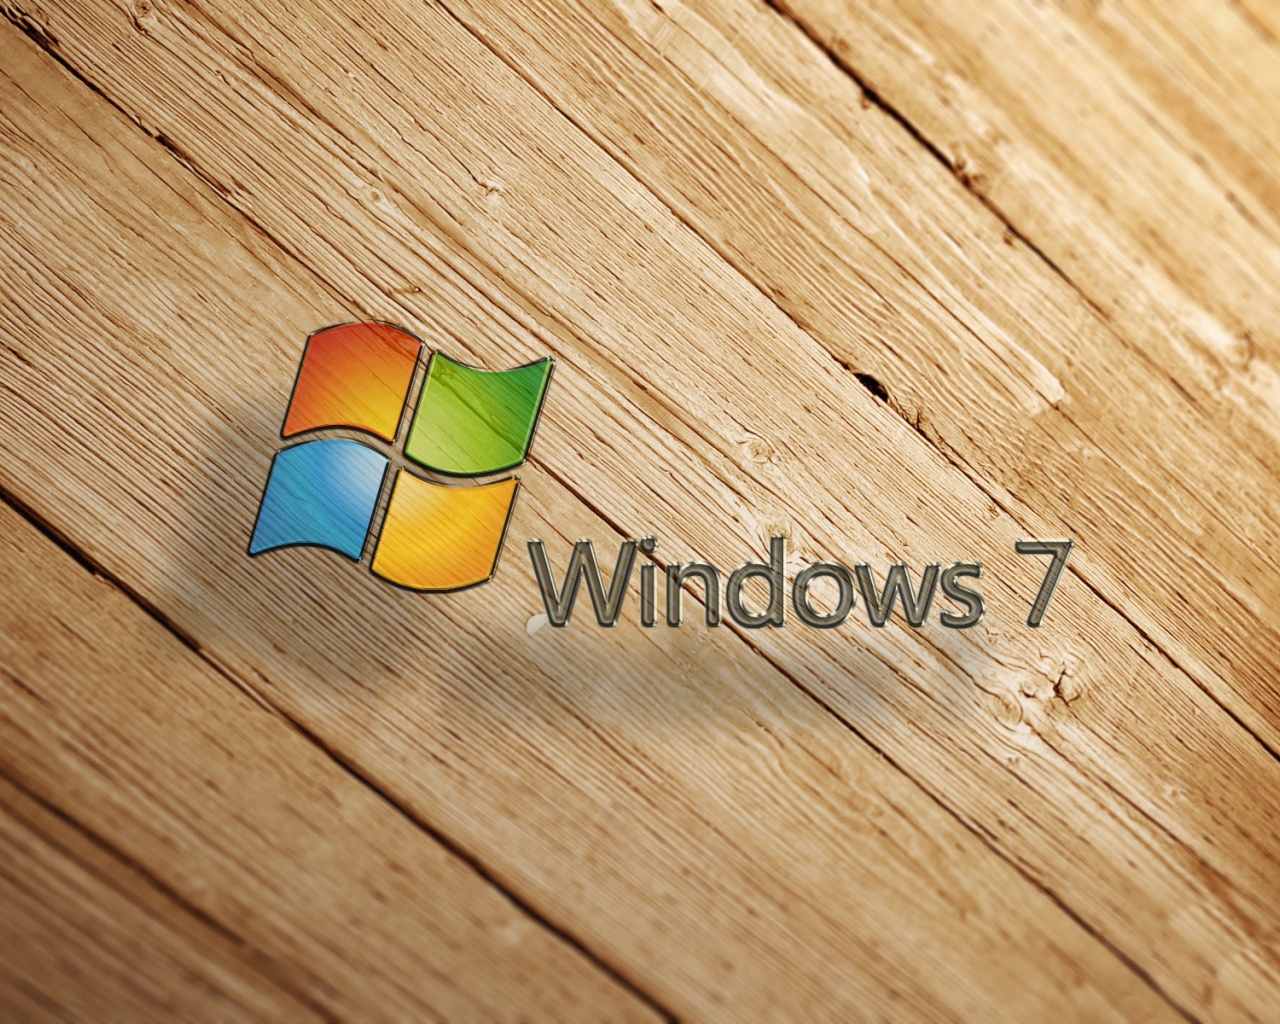 Windows 7 Wood Computer